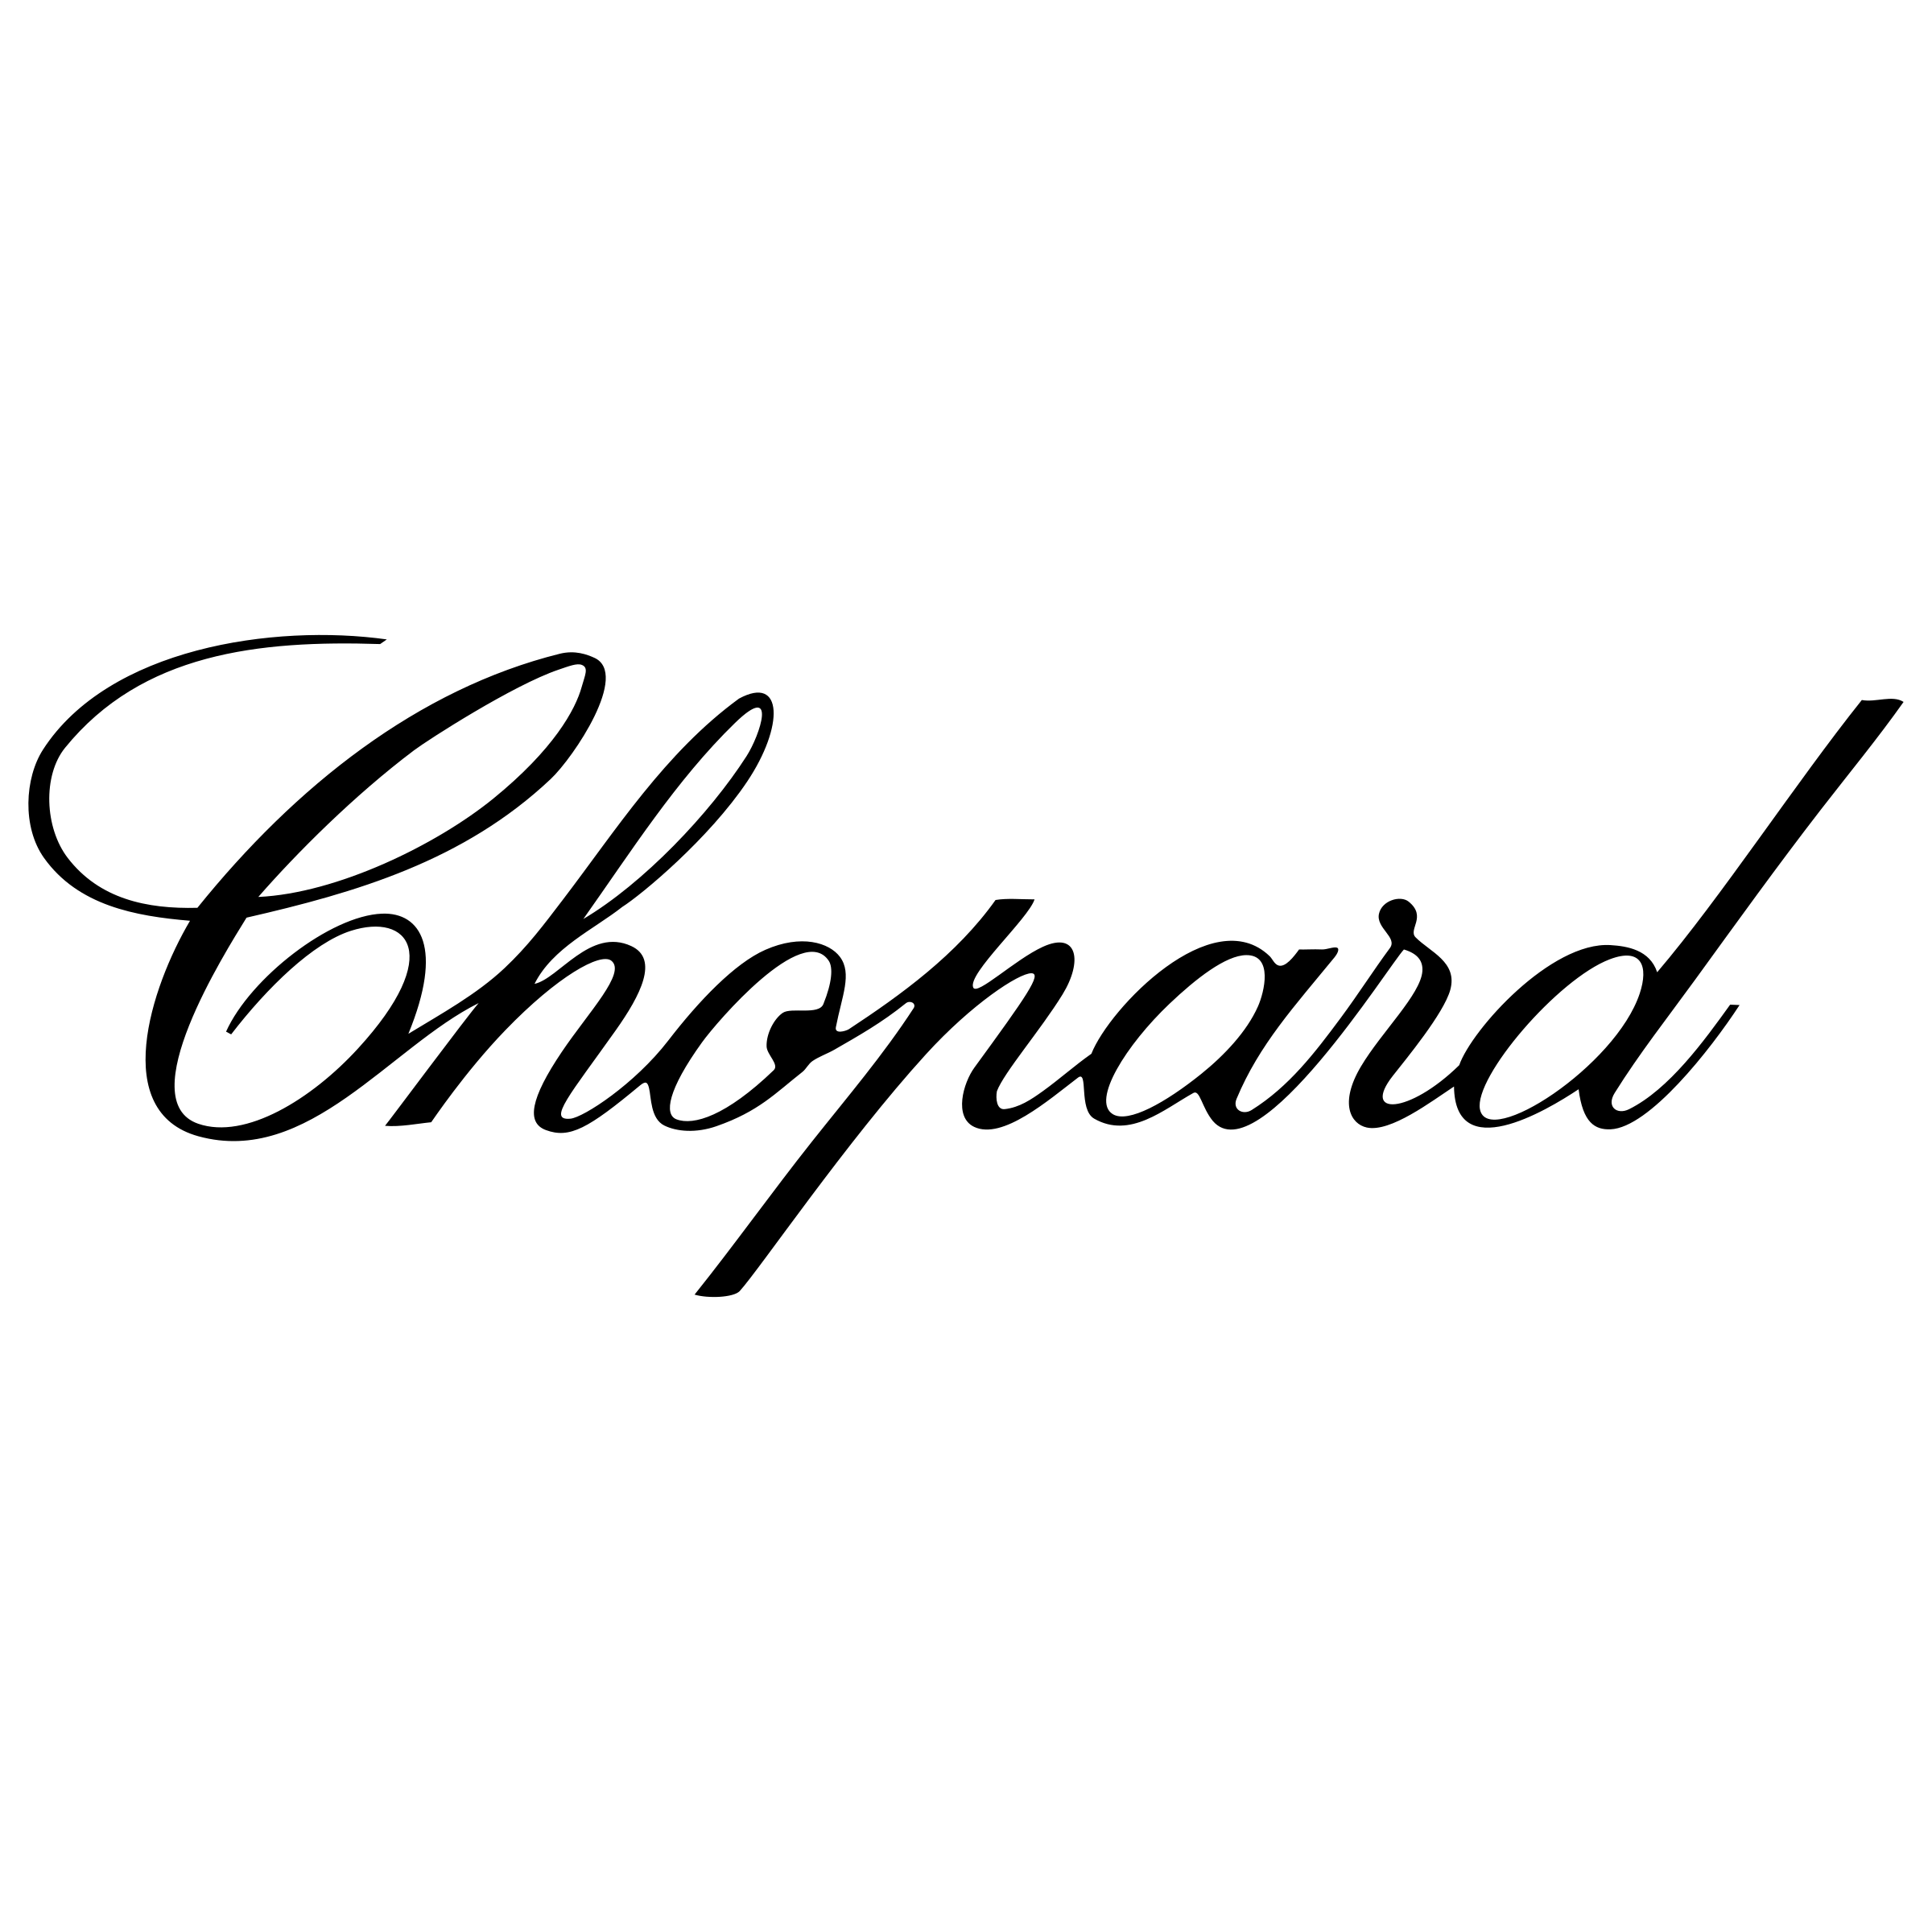 Chopard Logo - LogoDix